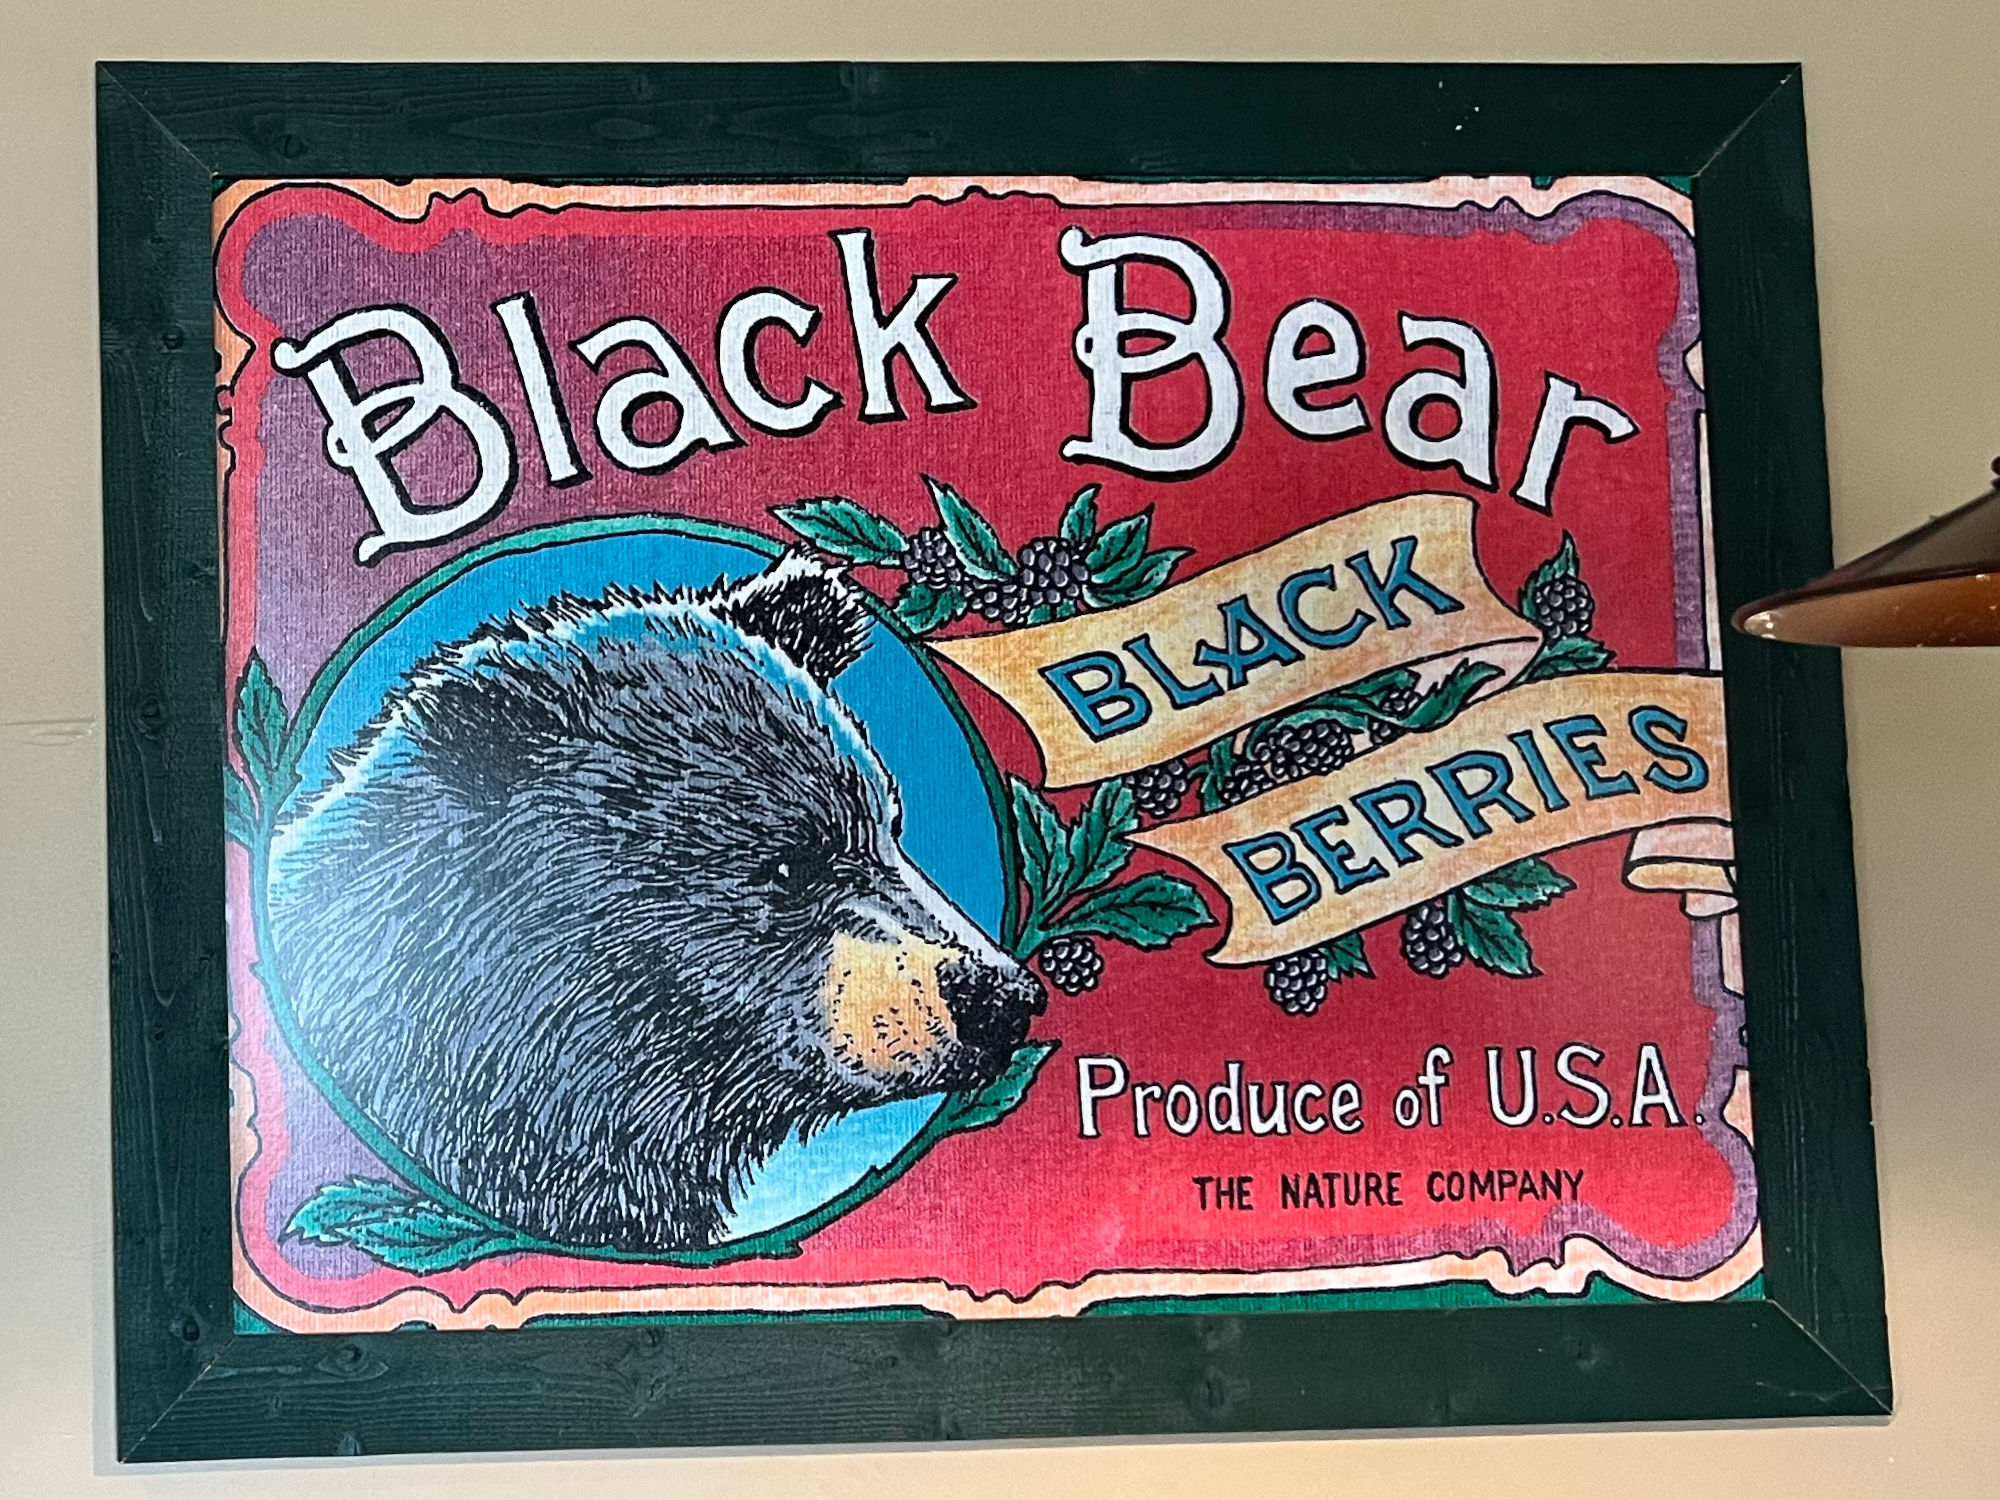 Black Bear Diner Black Berries